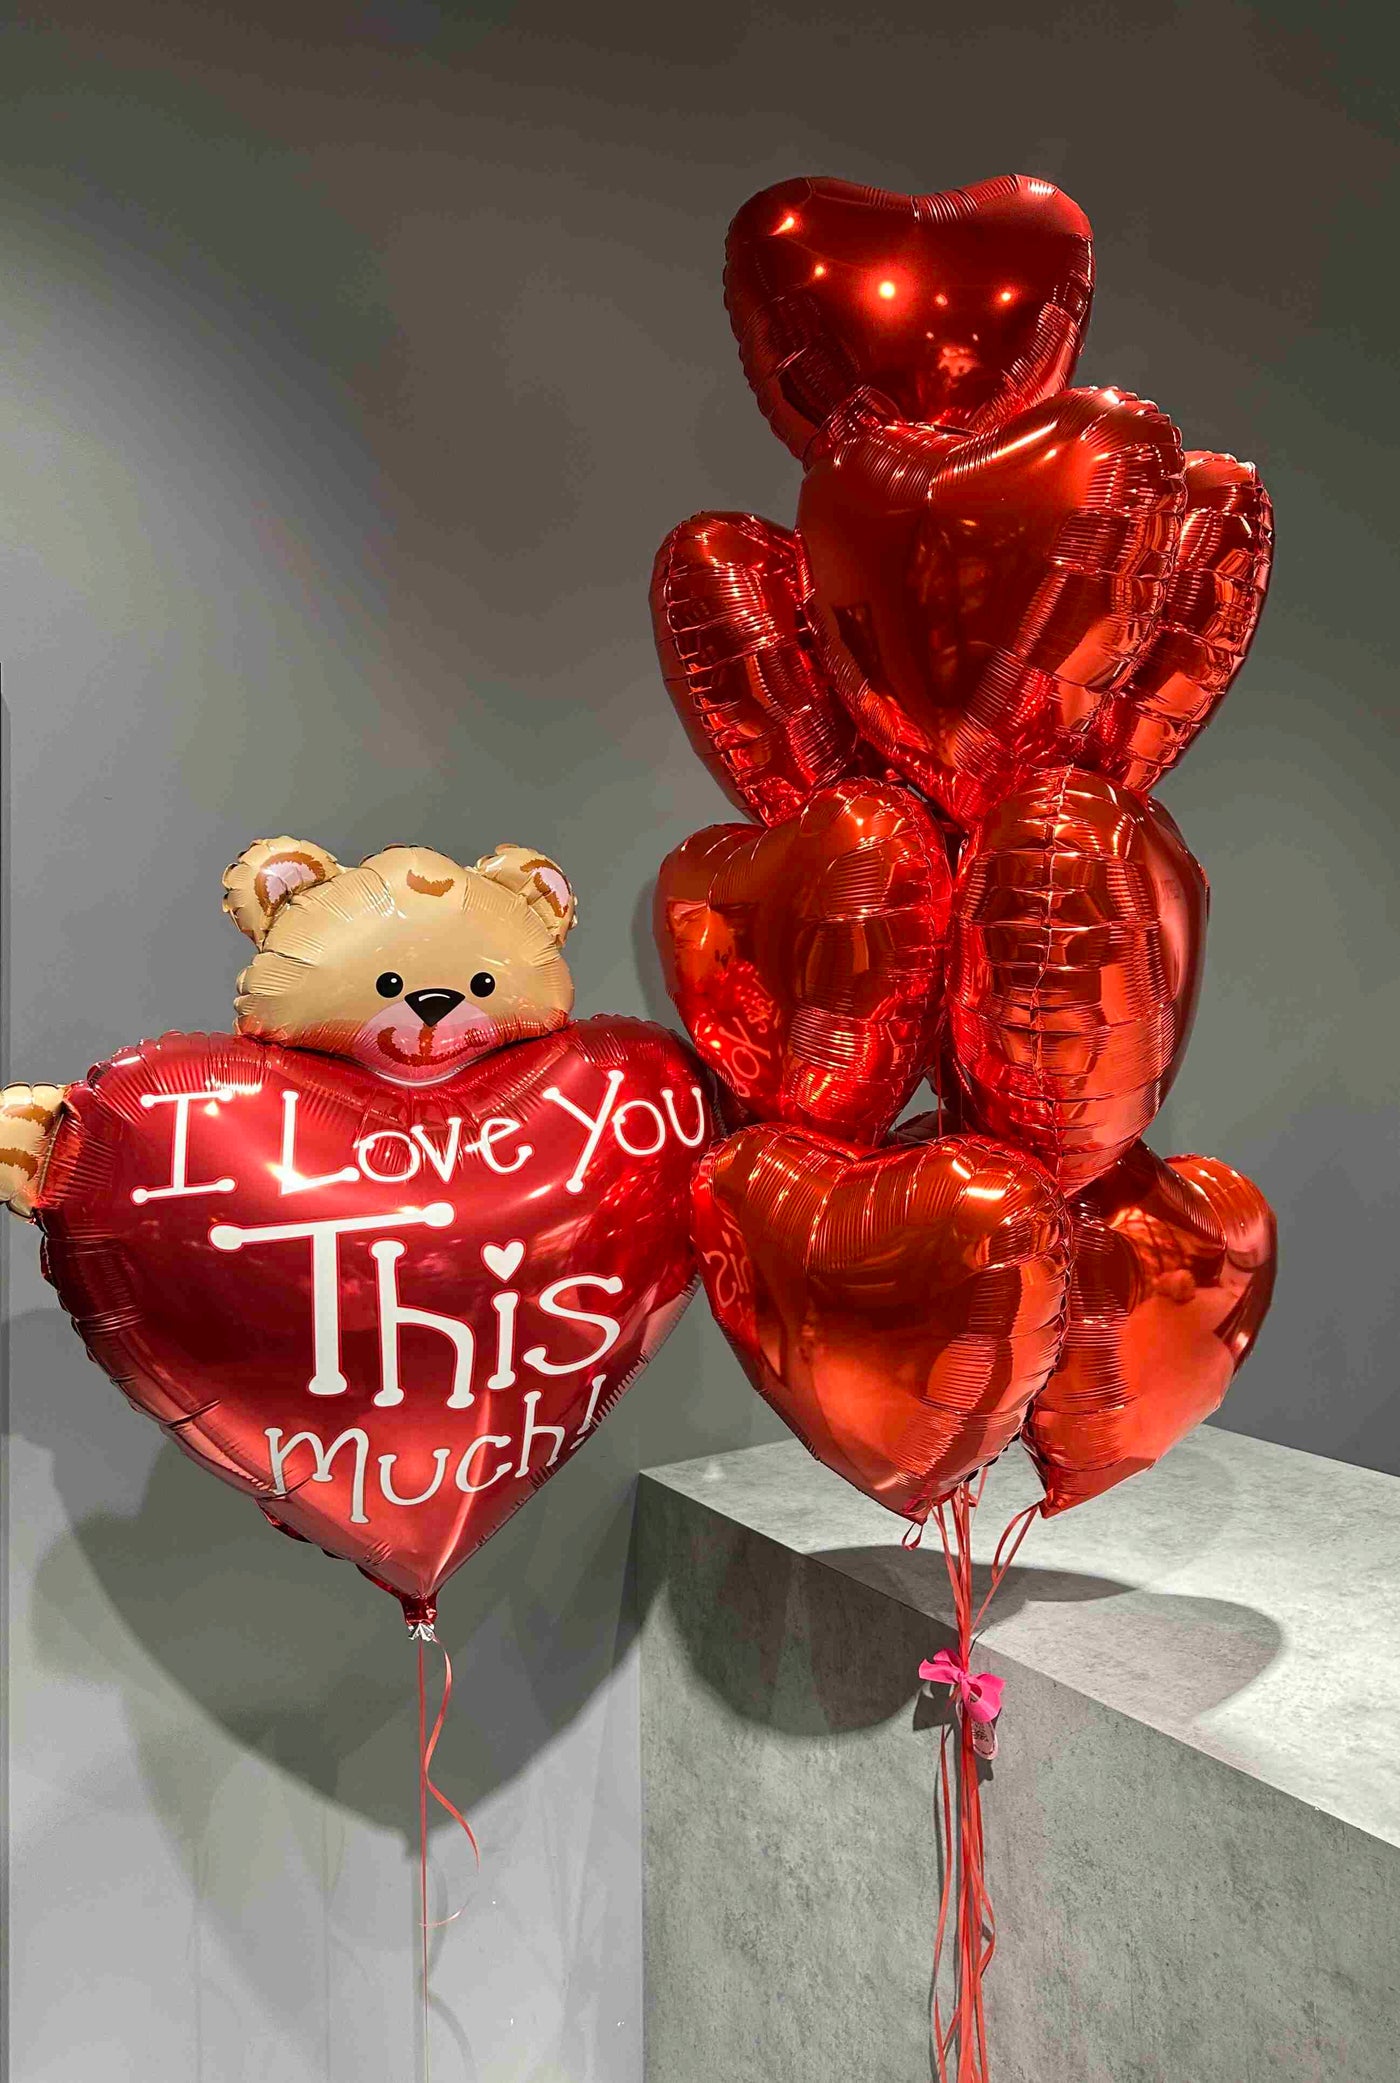 Zestaw balonów “Love you this much” balony giftbar.pl 